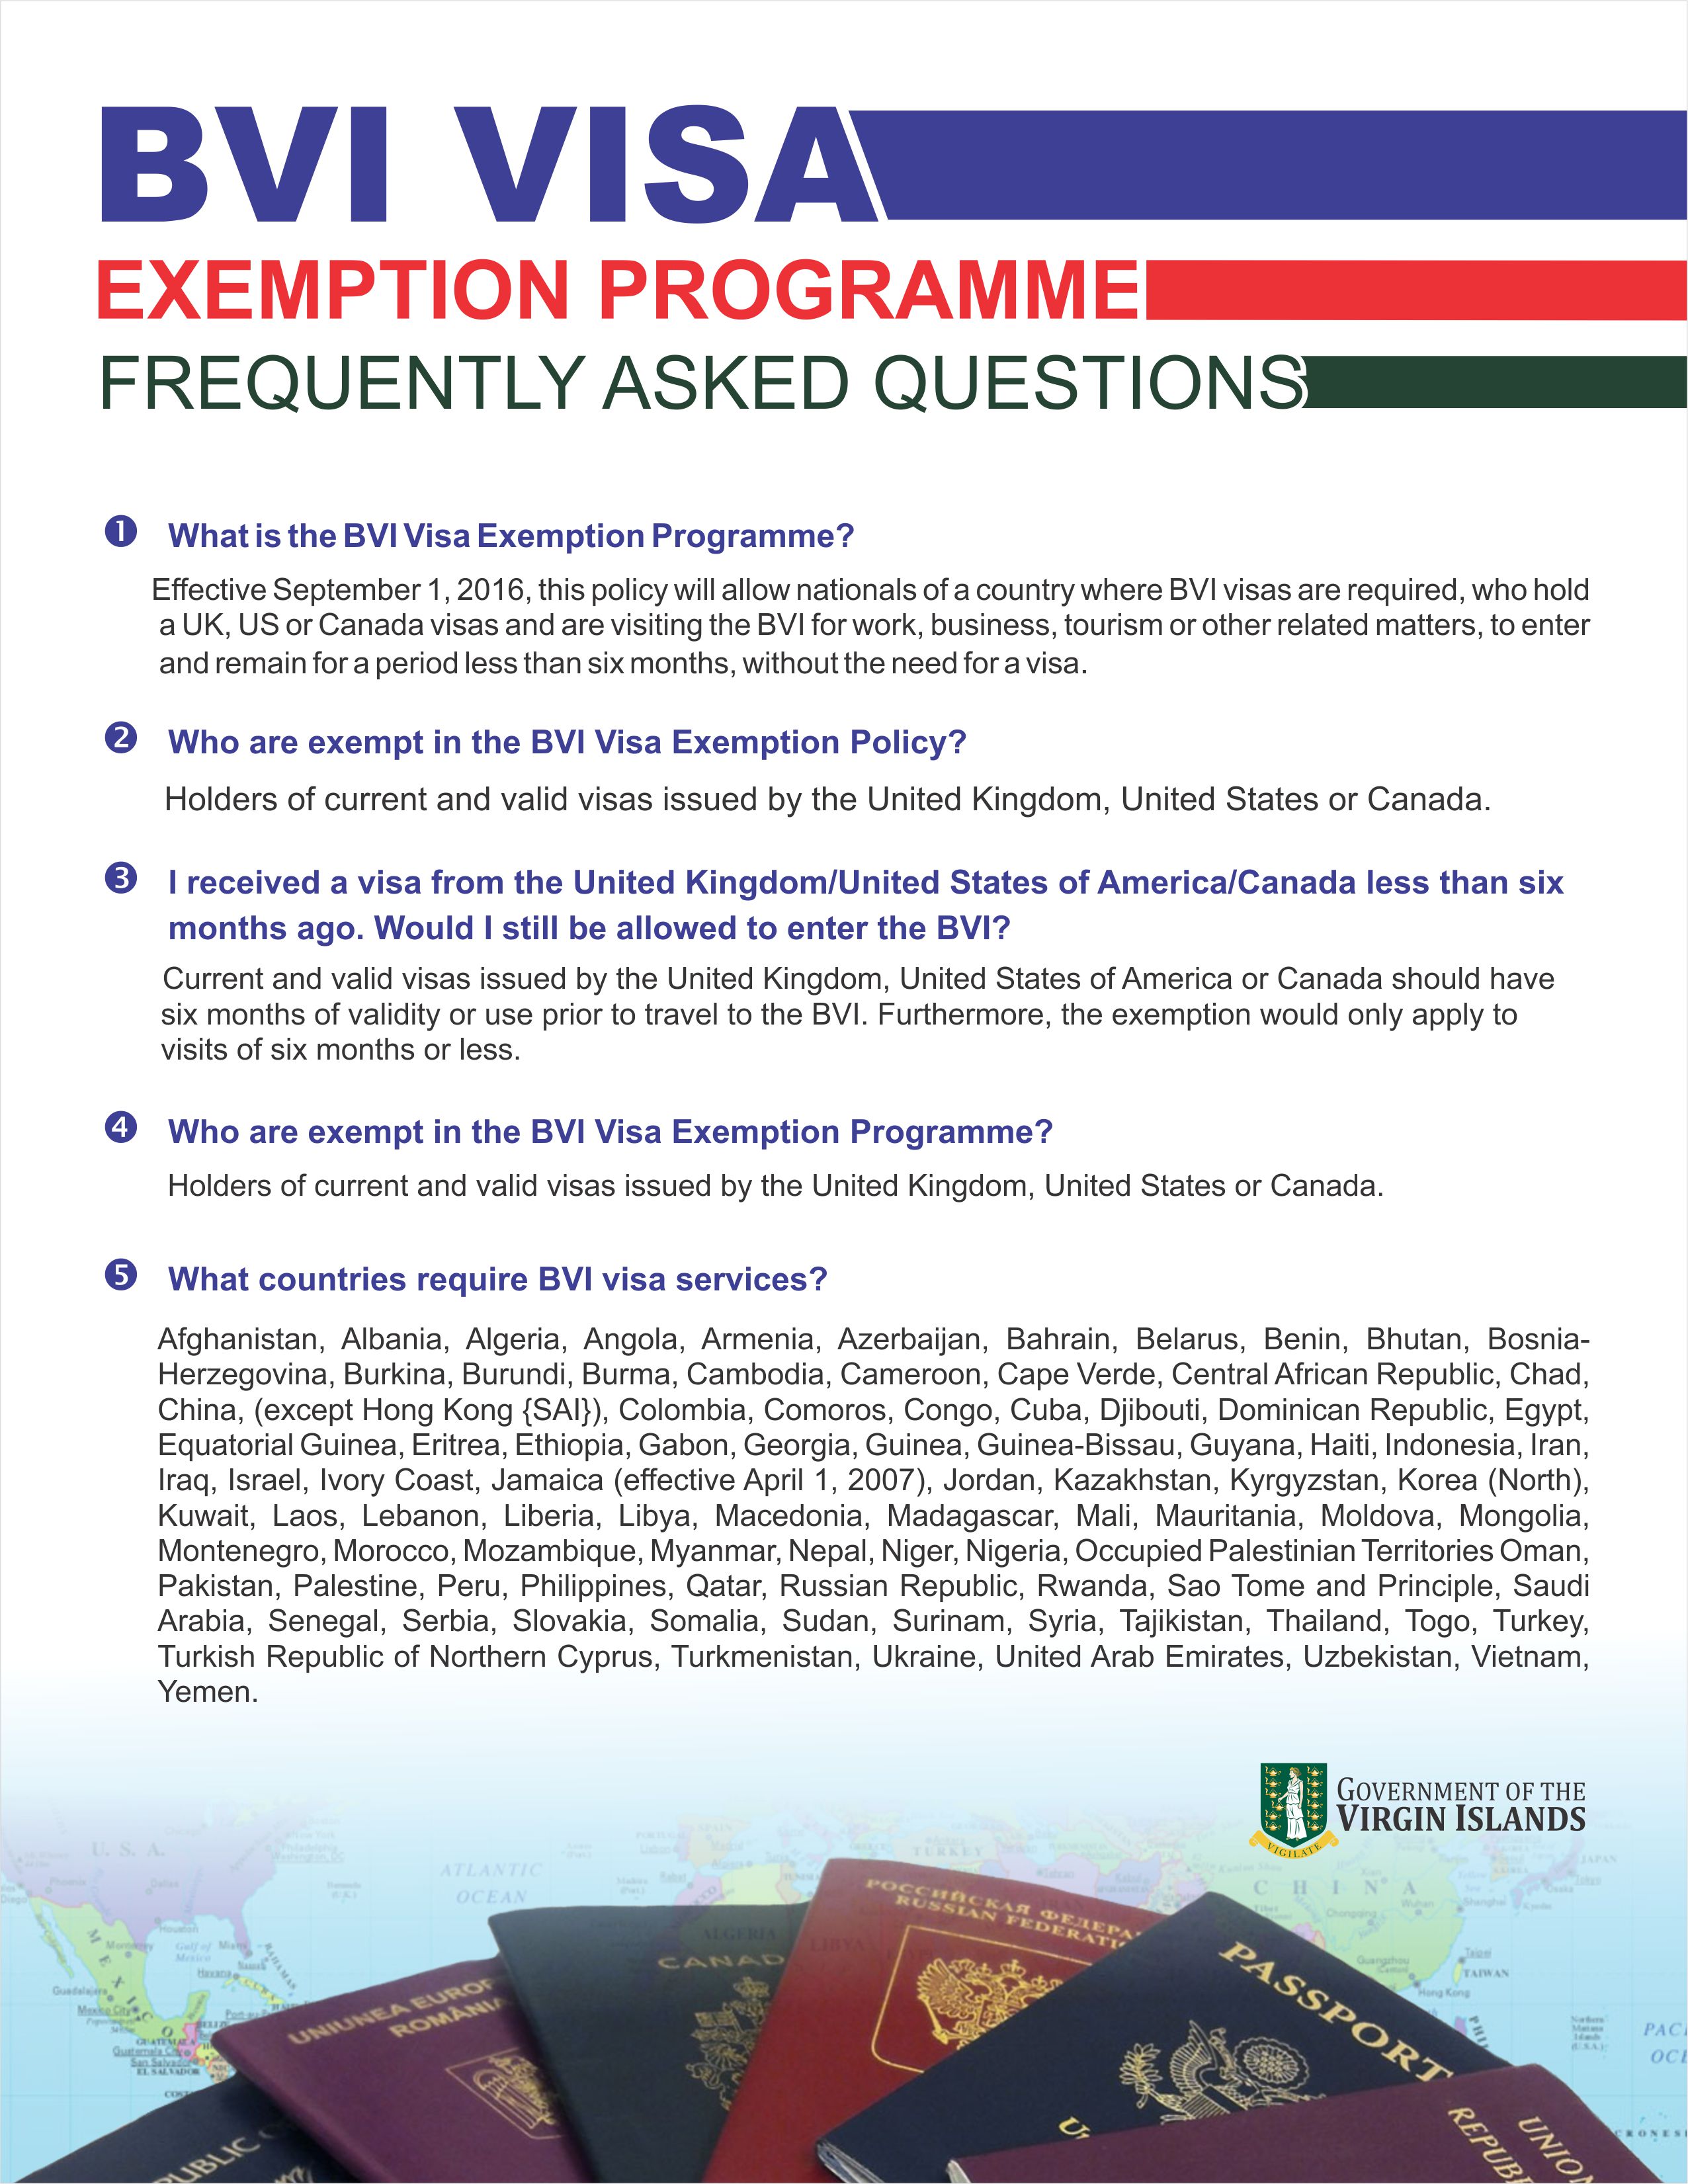 bvi visa exemption programme to go into effect september 1